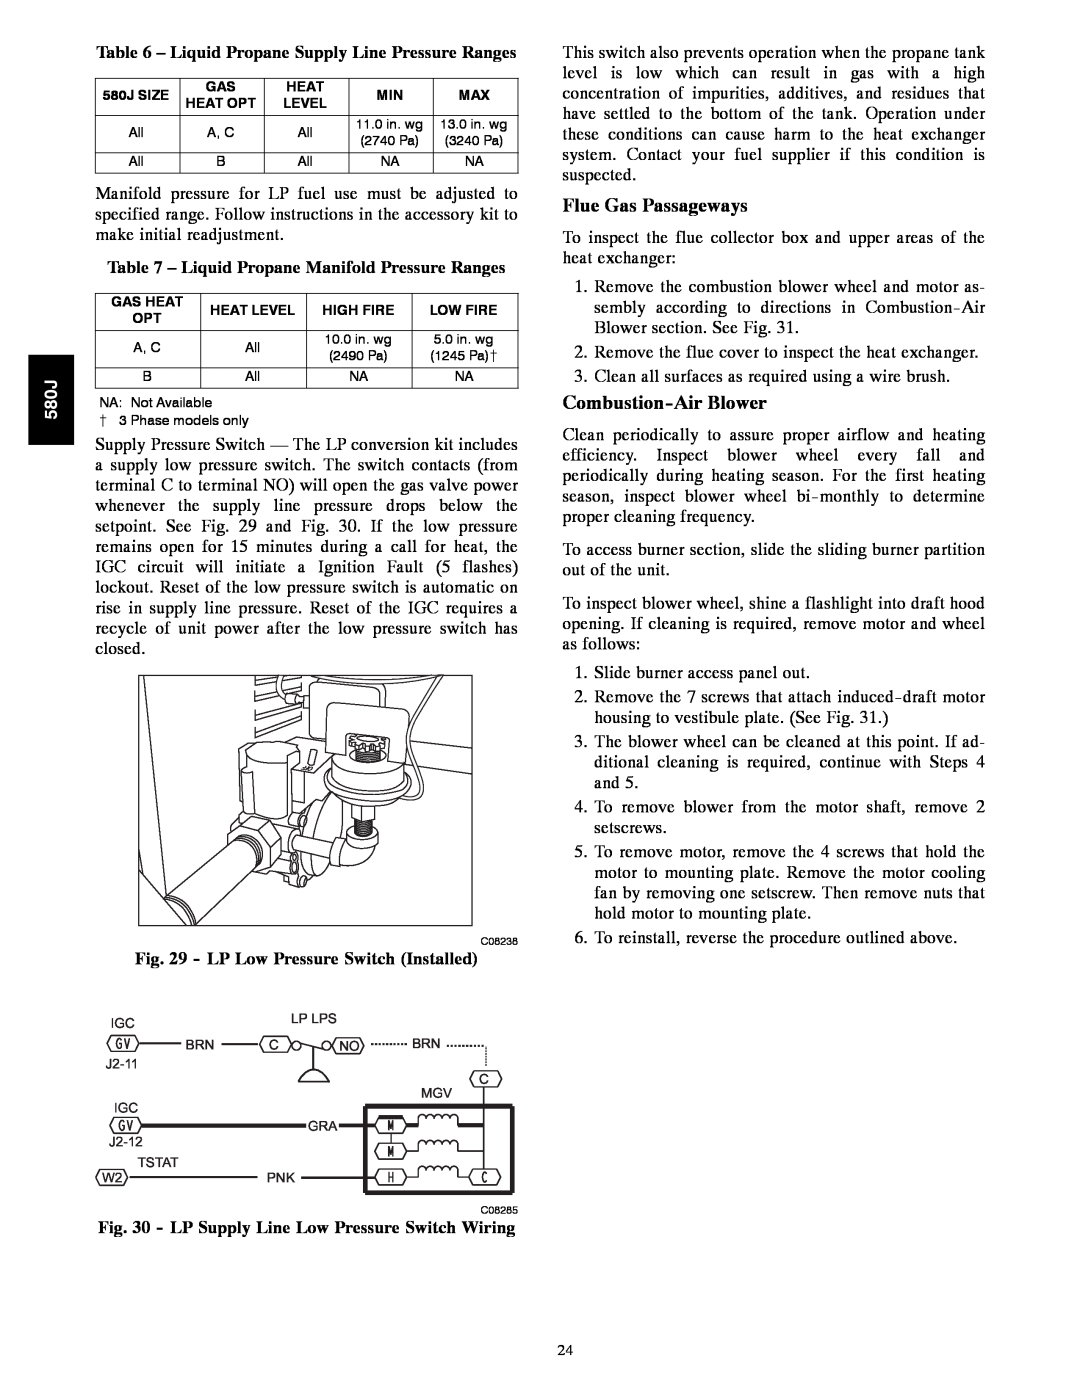 Bryant 580J*04--12 appendix Flue Gas Passageways, Combustion-AirBlower, Liquid Propane Manifold Pressure Ranges 